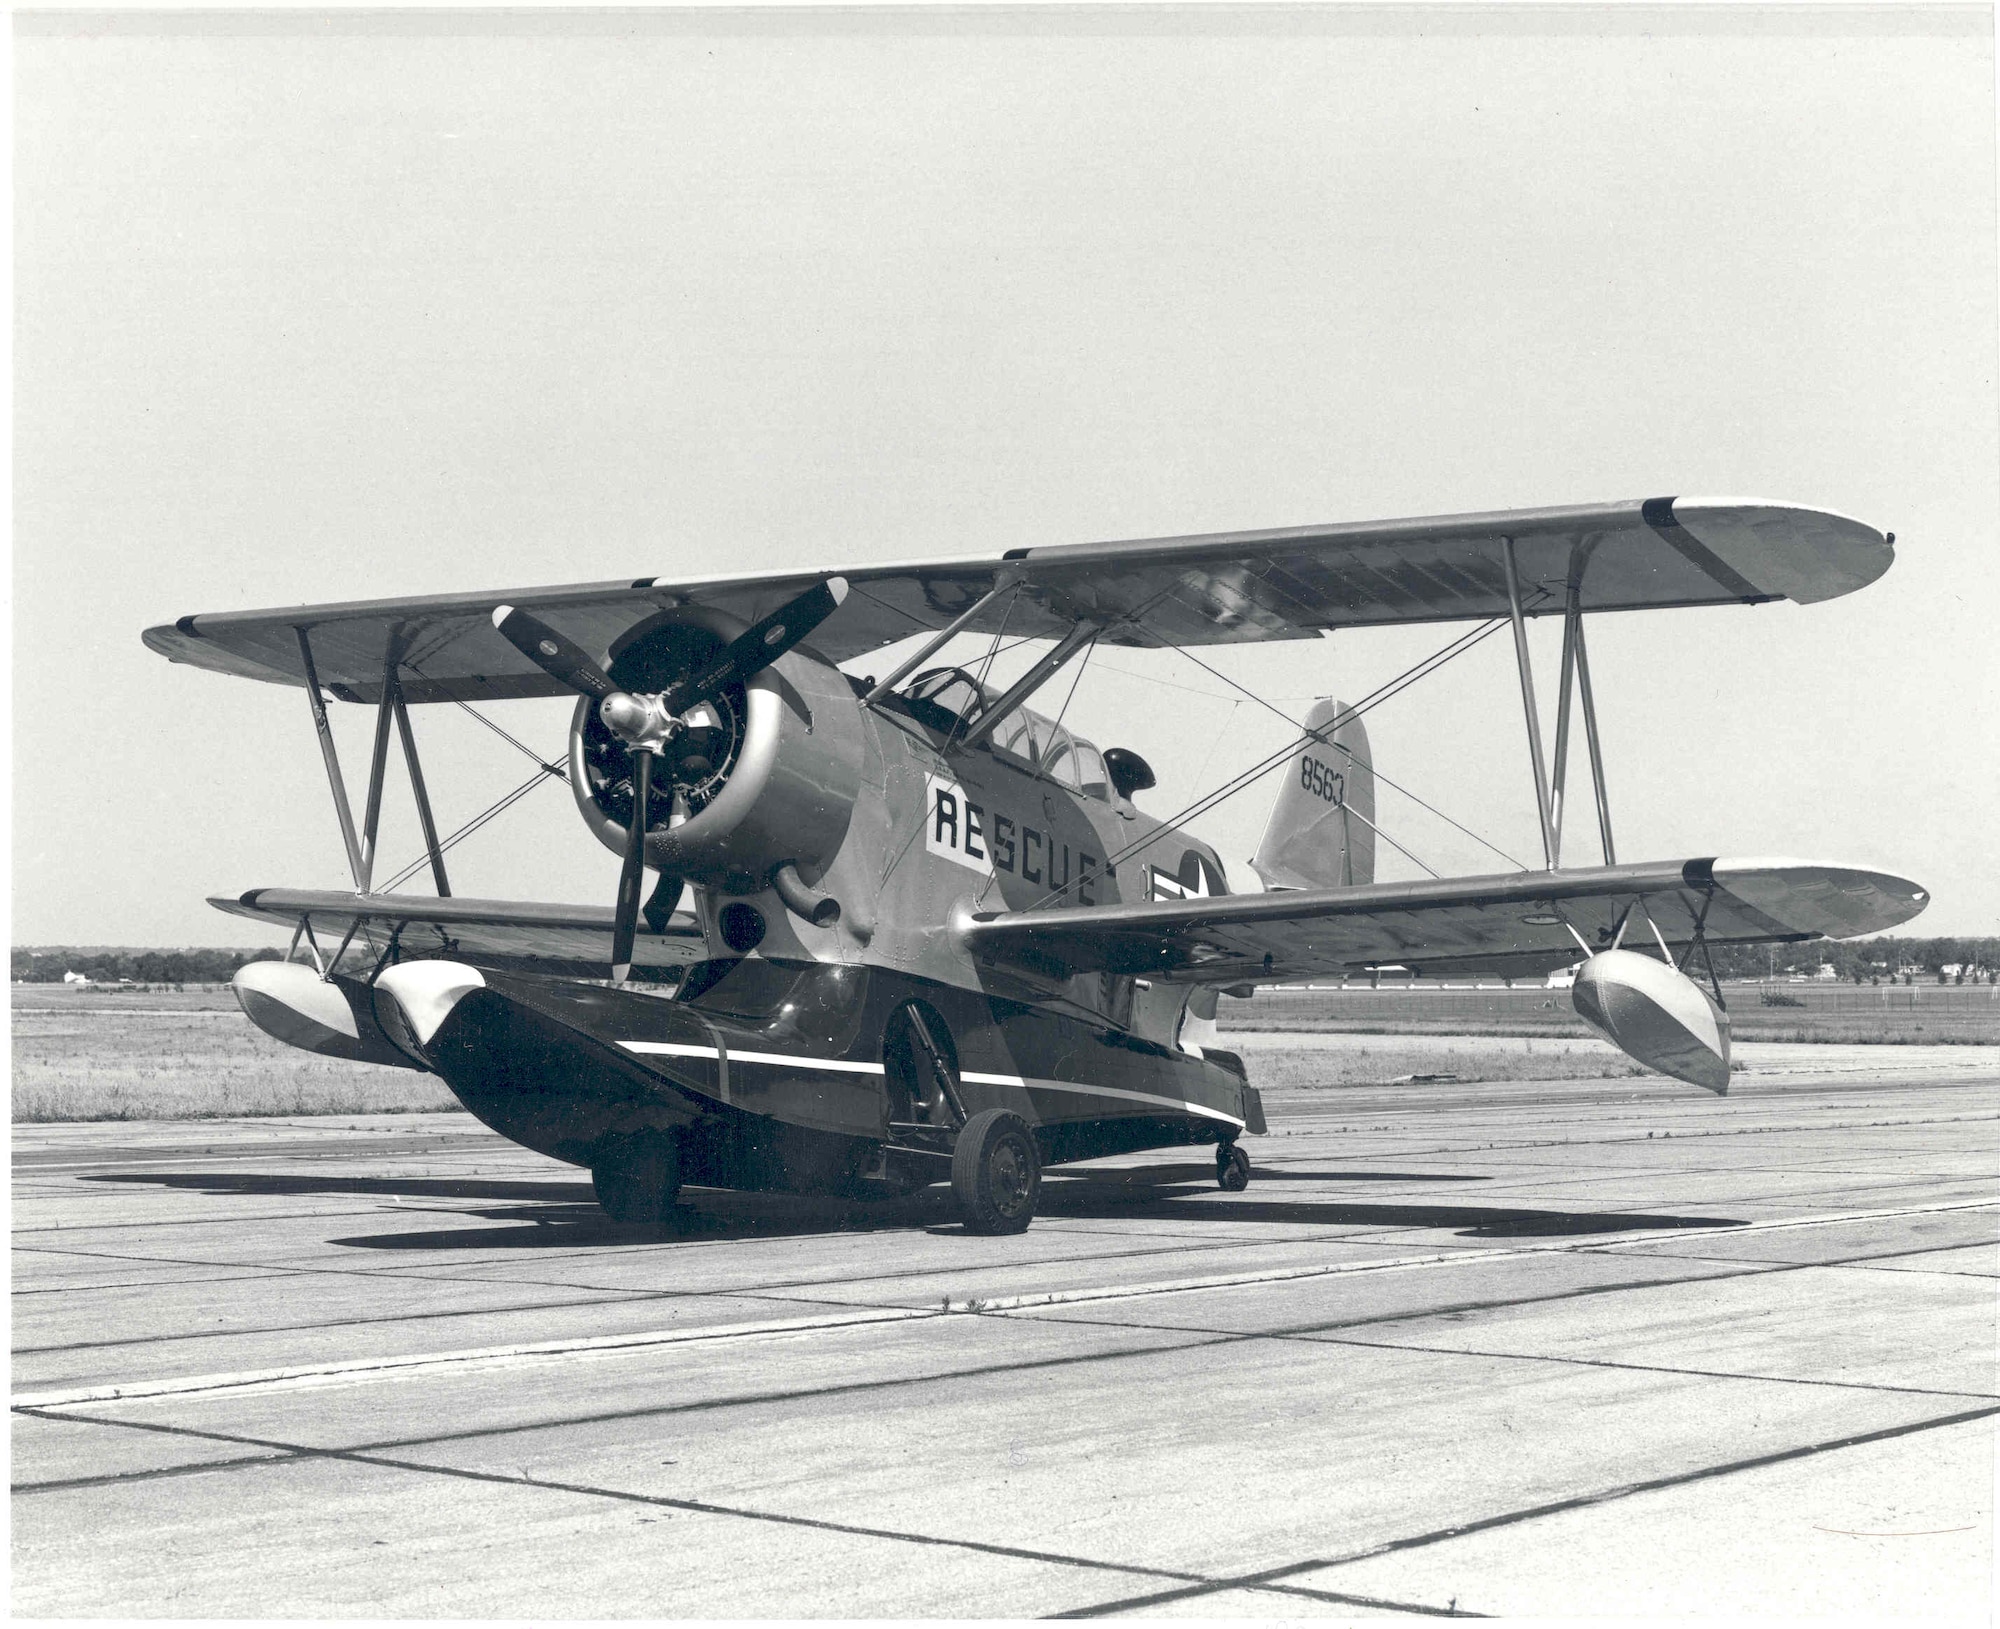 Historic photo of a Grumman Duck amphibian aircraft.